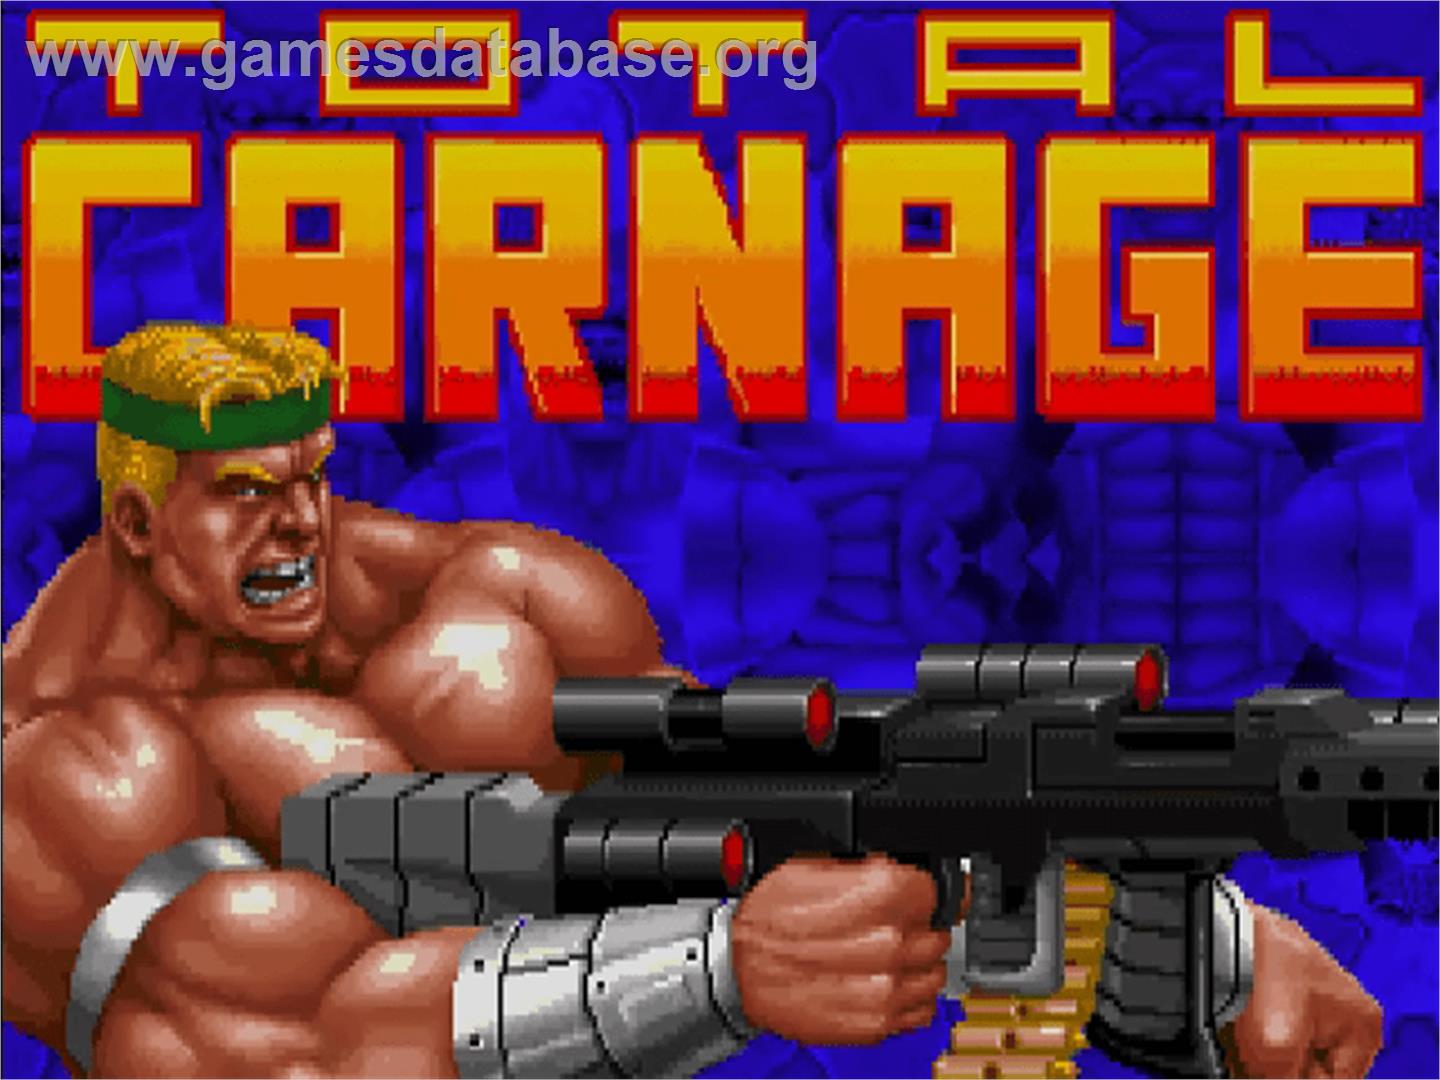 Total Carnage - Commodore Amiga CD32 - Artwork - Title Screen